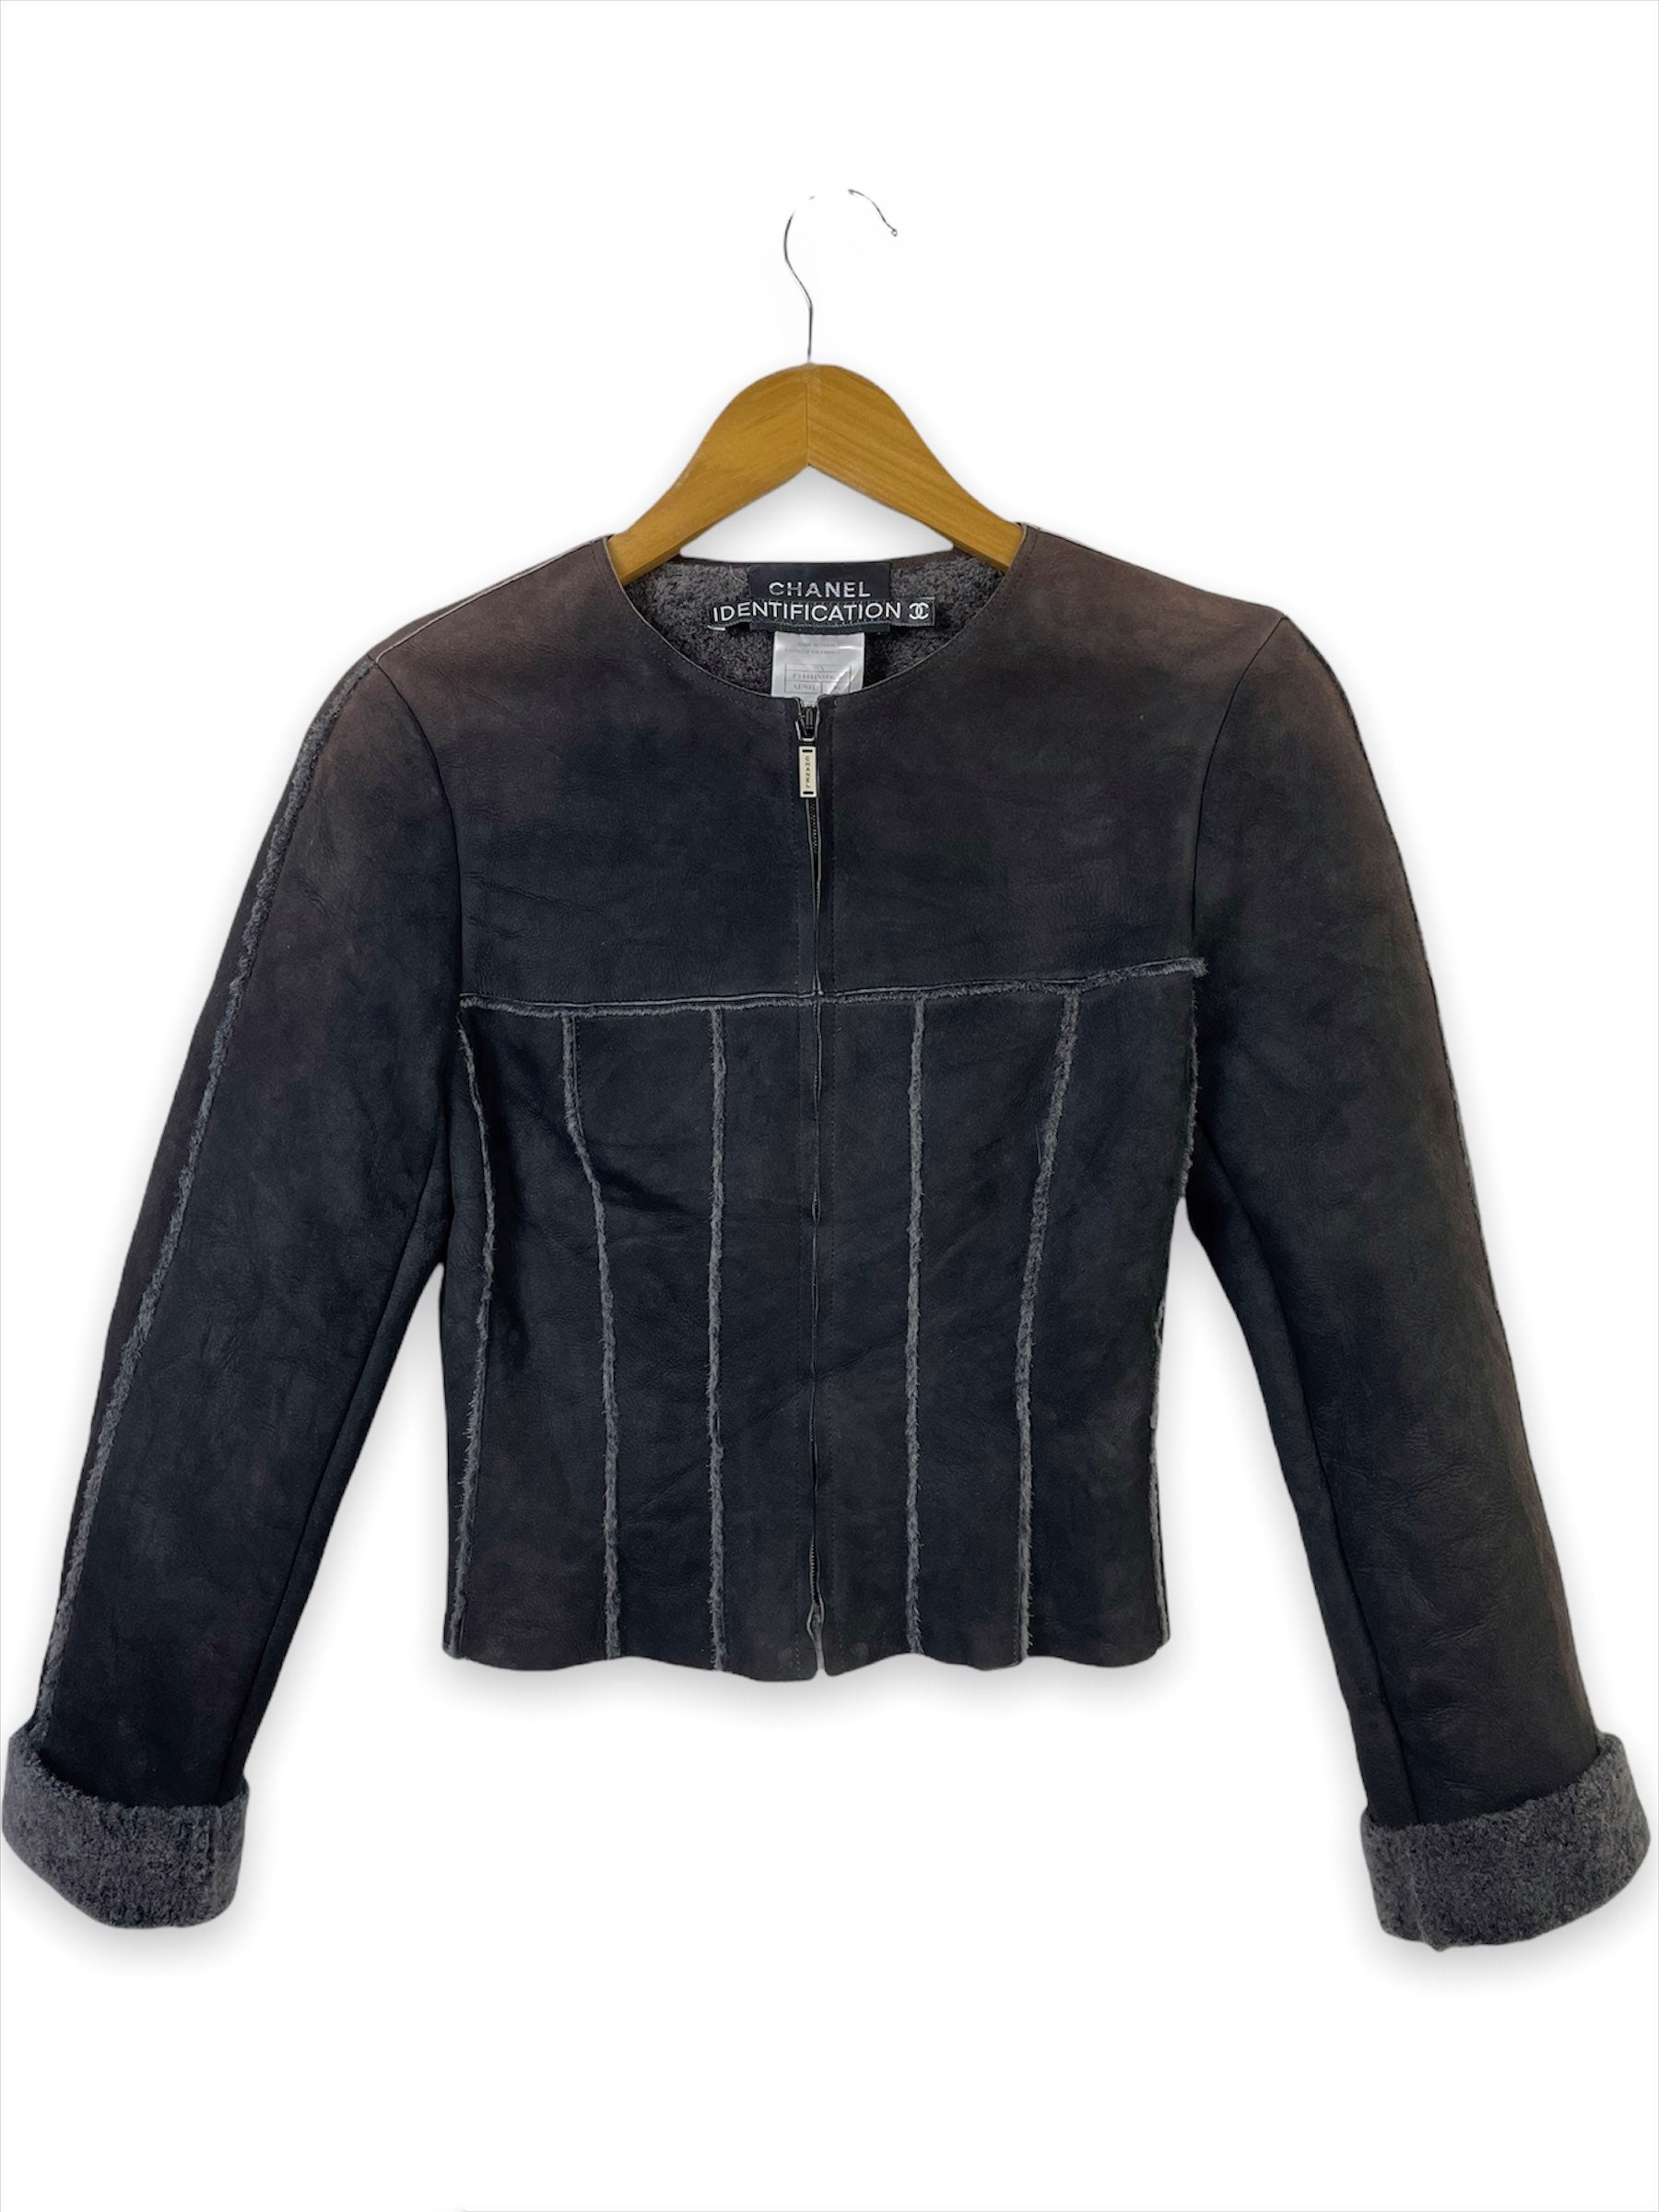 CHANEL, Jackets & Coats, Vintage Chanel 999 Tan Suede Sheepskin Cropped  Jacket Size Fr 38